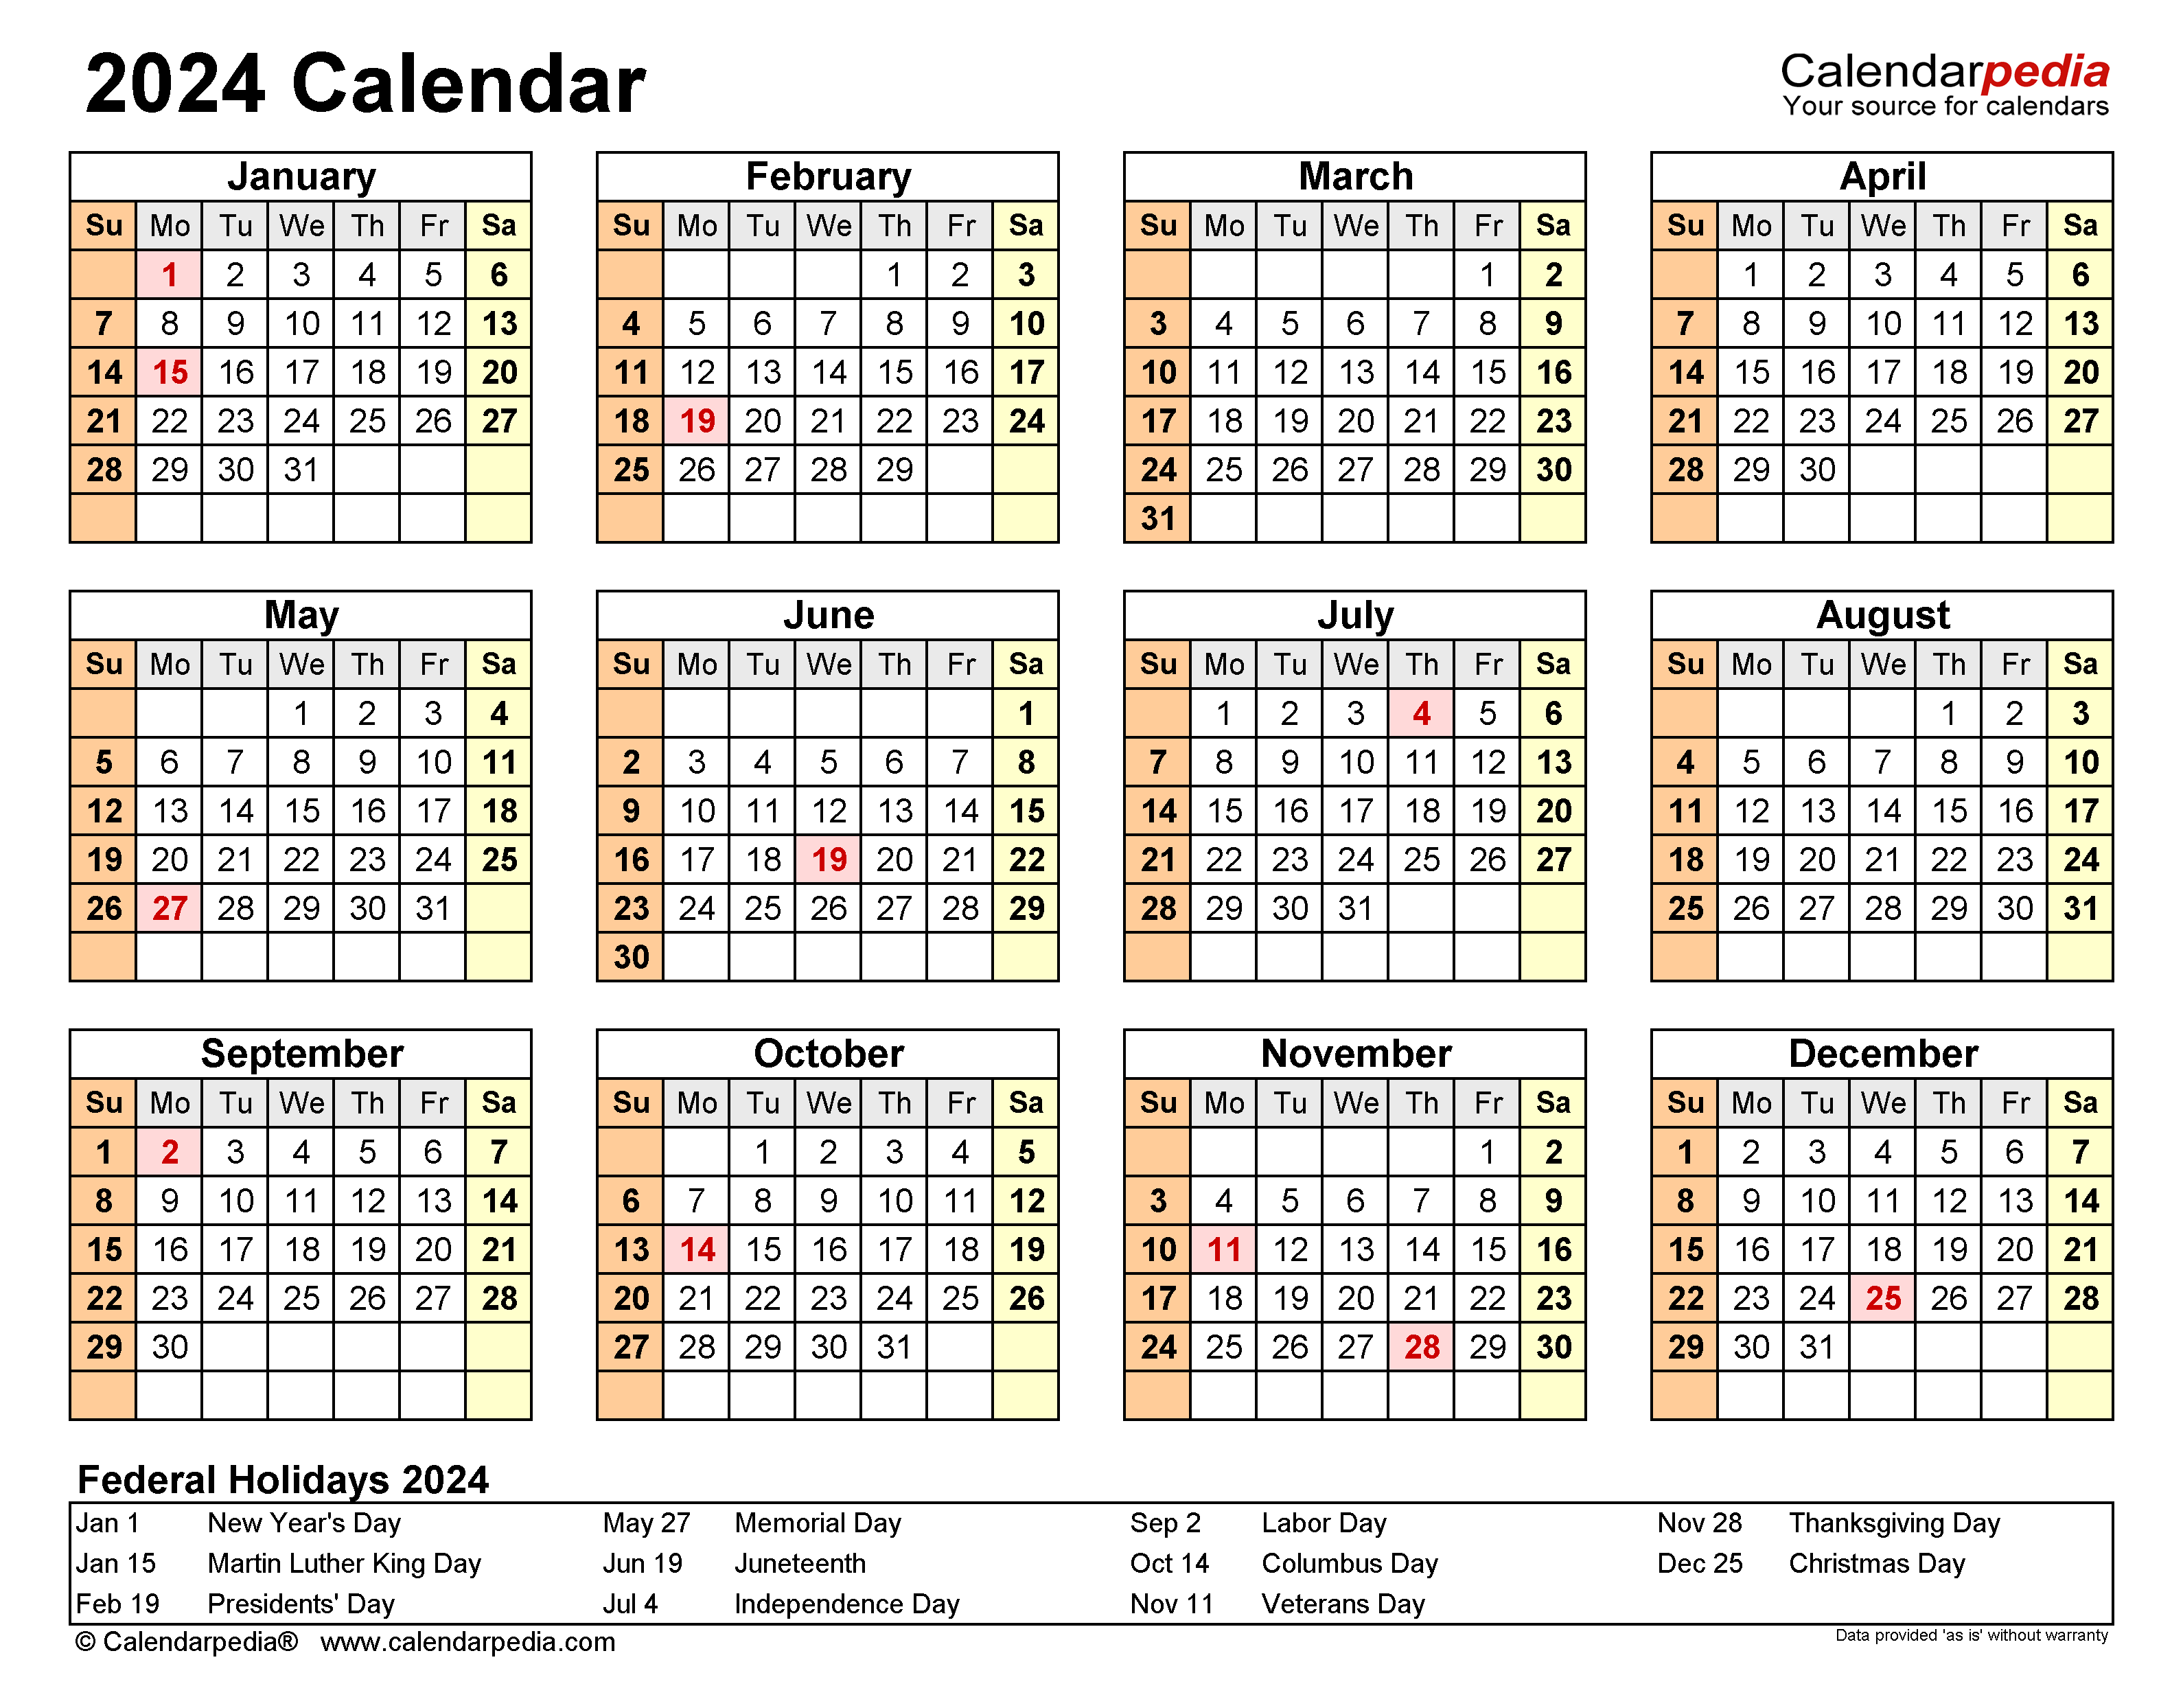 2024 Calendar - Free Printable Word Templates - Calendarpedia with regard to Free Printable Calendar 2024 Word Format